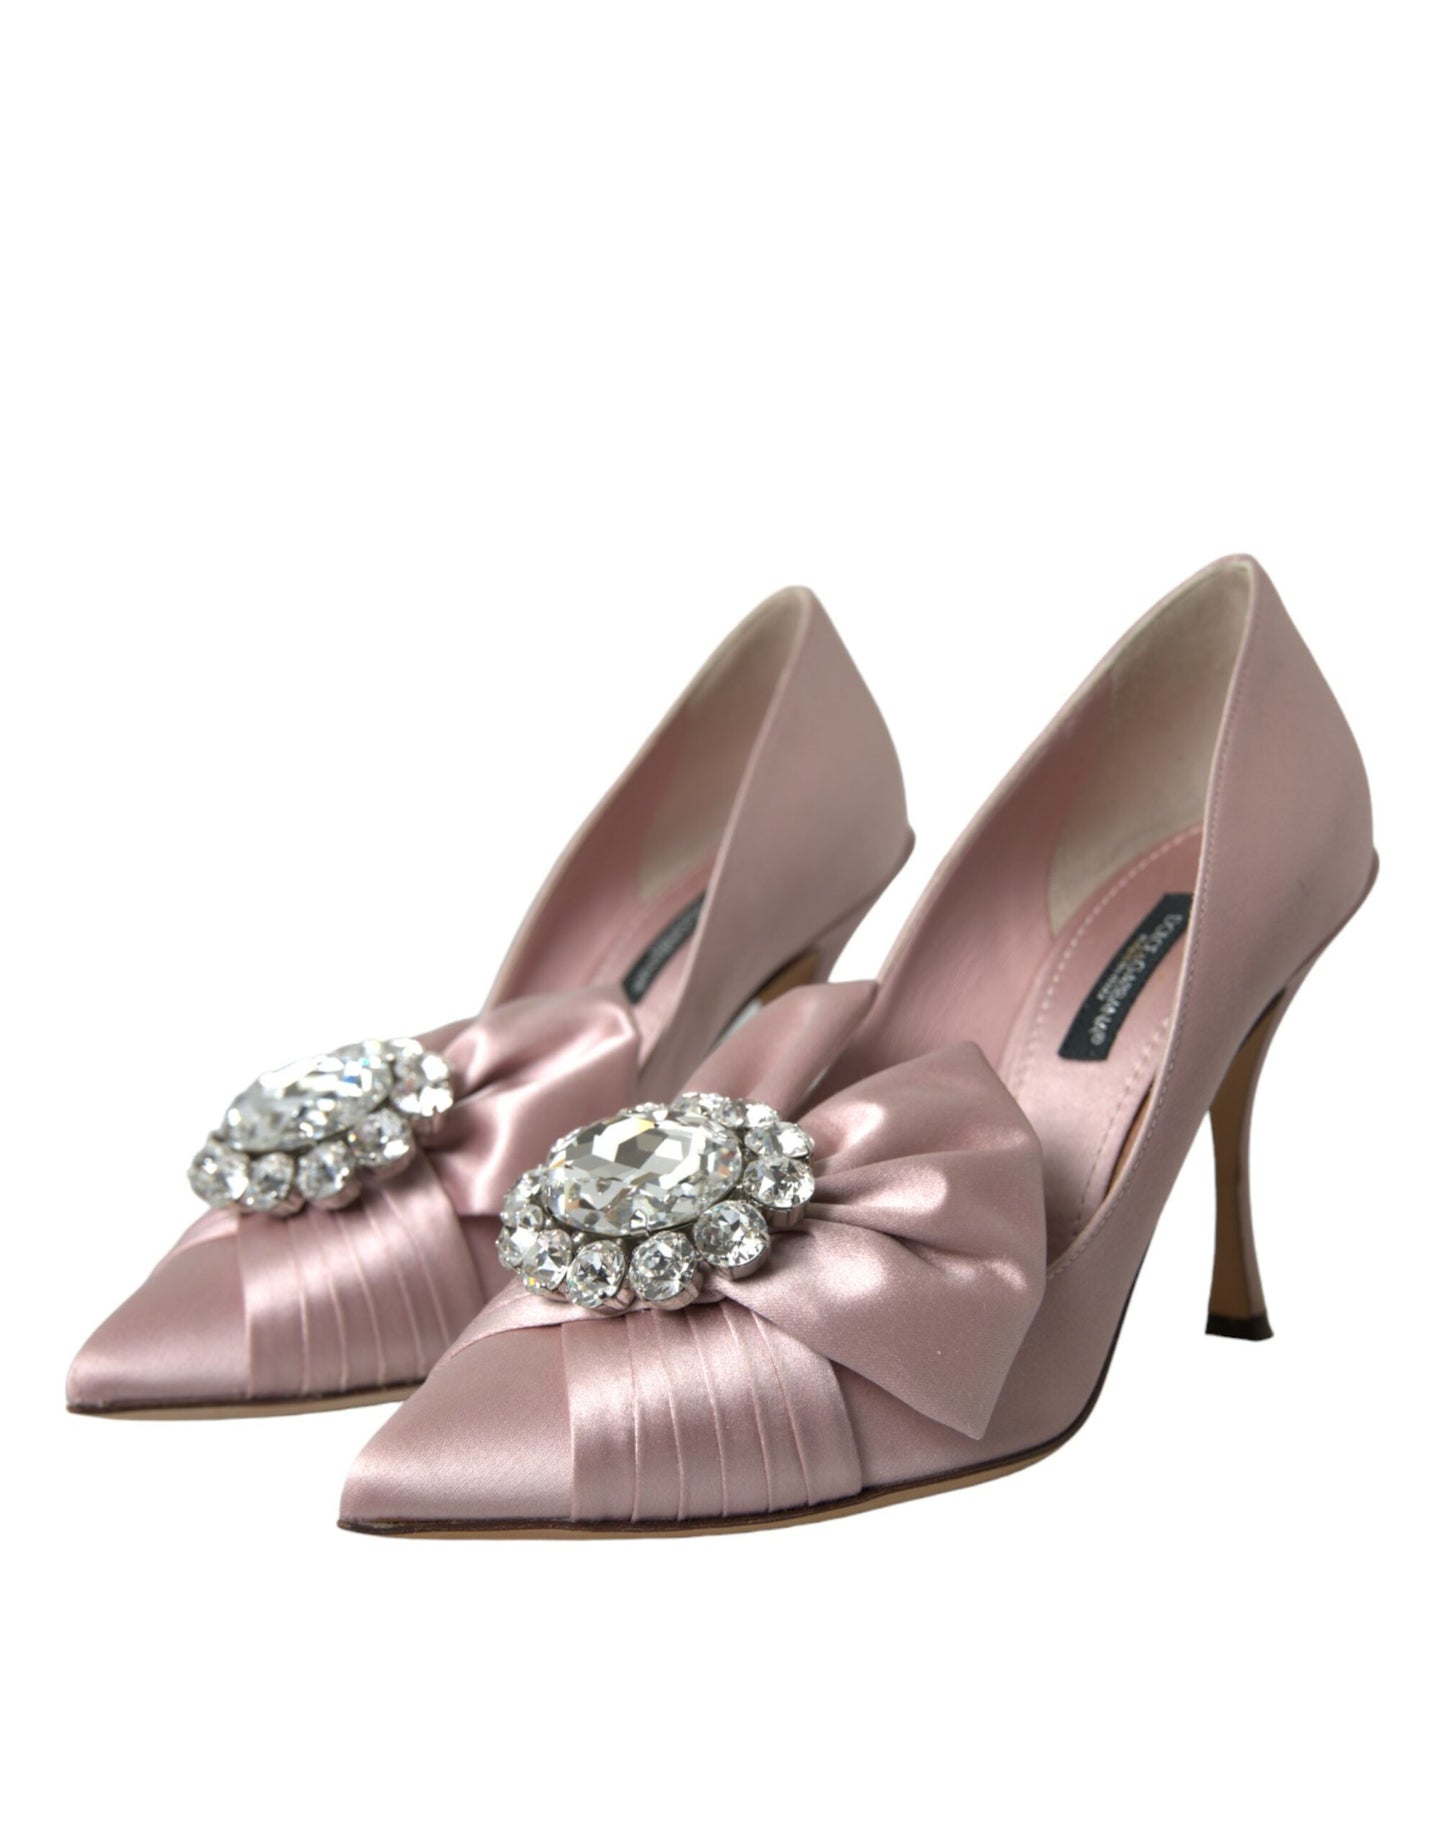 Dolce & Gabbana Pink Satin Crystal High Heels Pumps Shoes